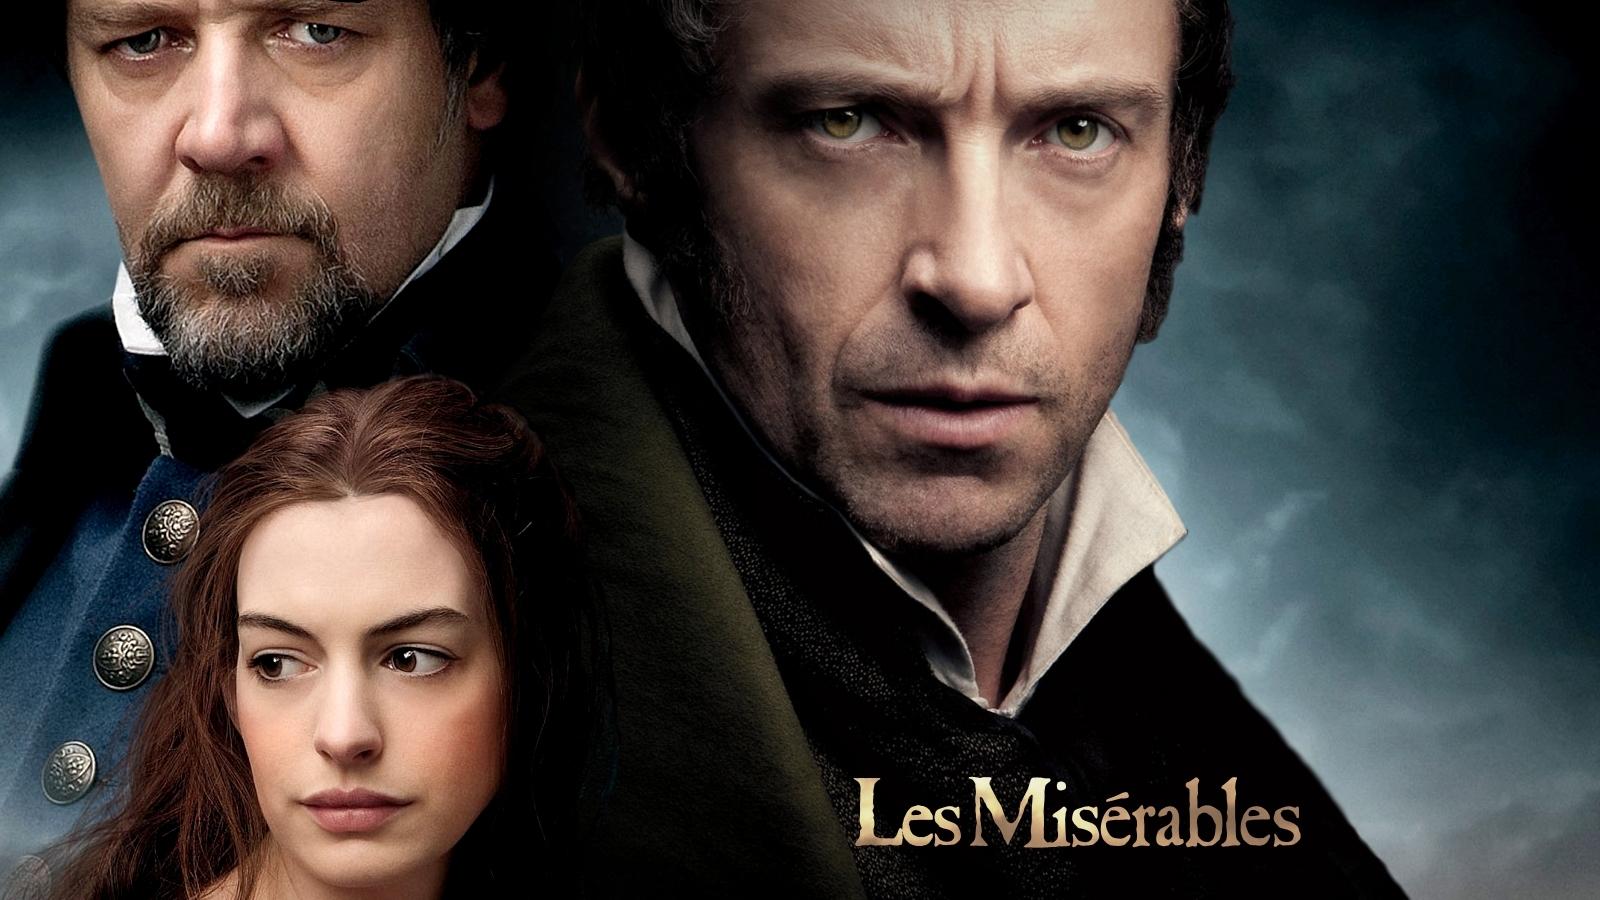 Les Miserable فيلم - أفلام موسيقية 